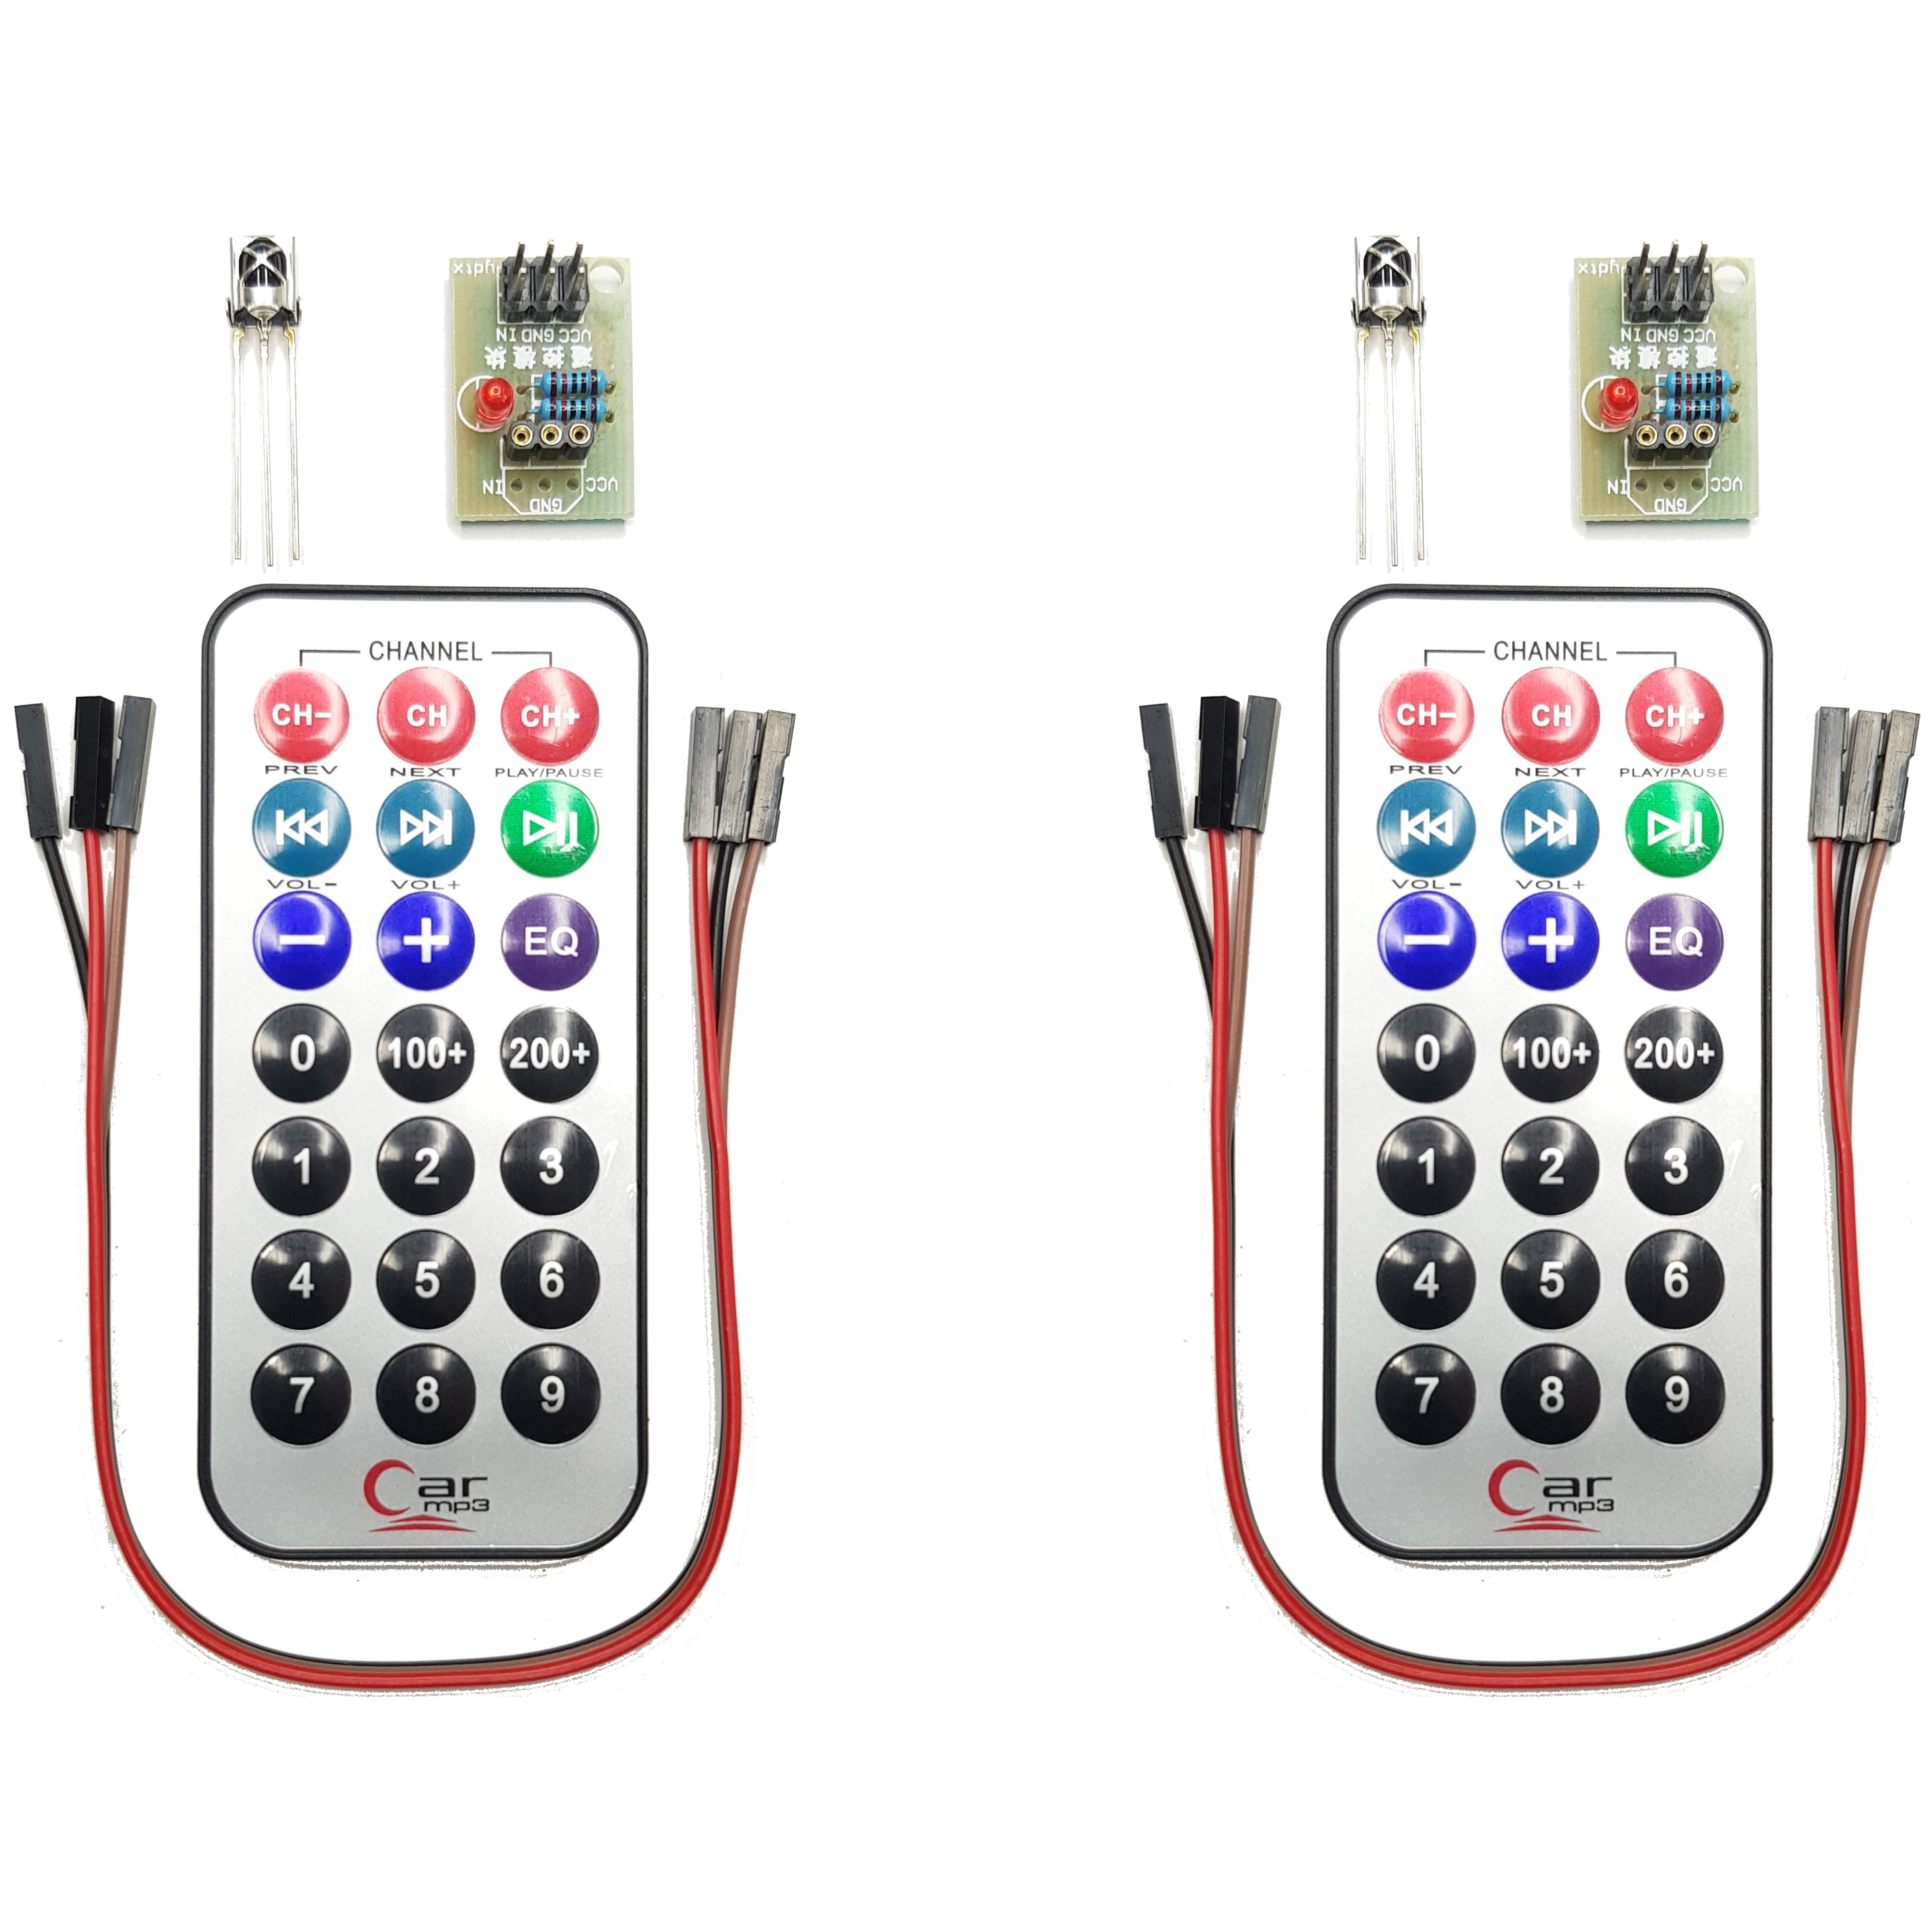 Infrared IR Remote Control Kit with 21-key Controller and Receiver for Arduino, ESP32, ESP8266, Raspberry Pi, 2 sets